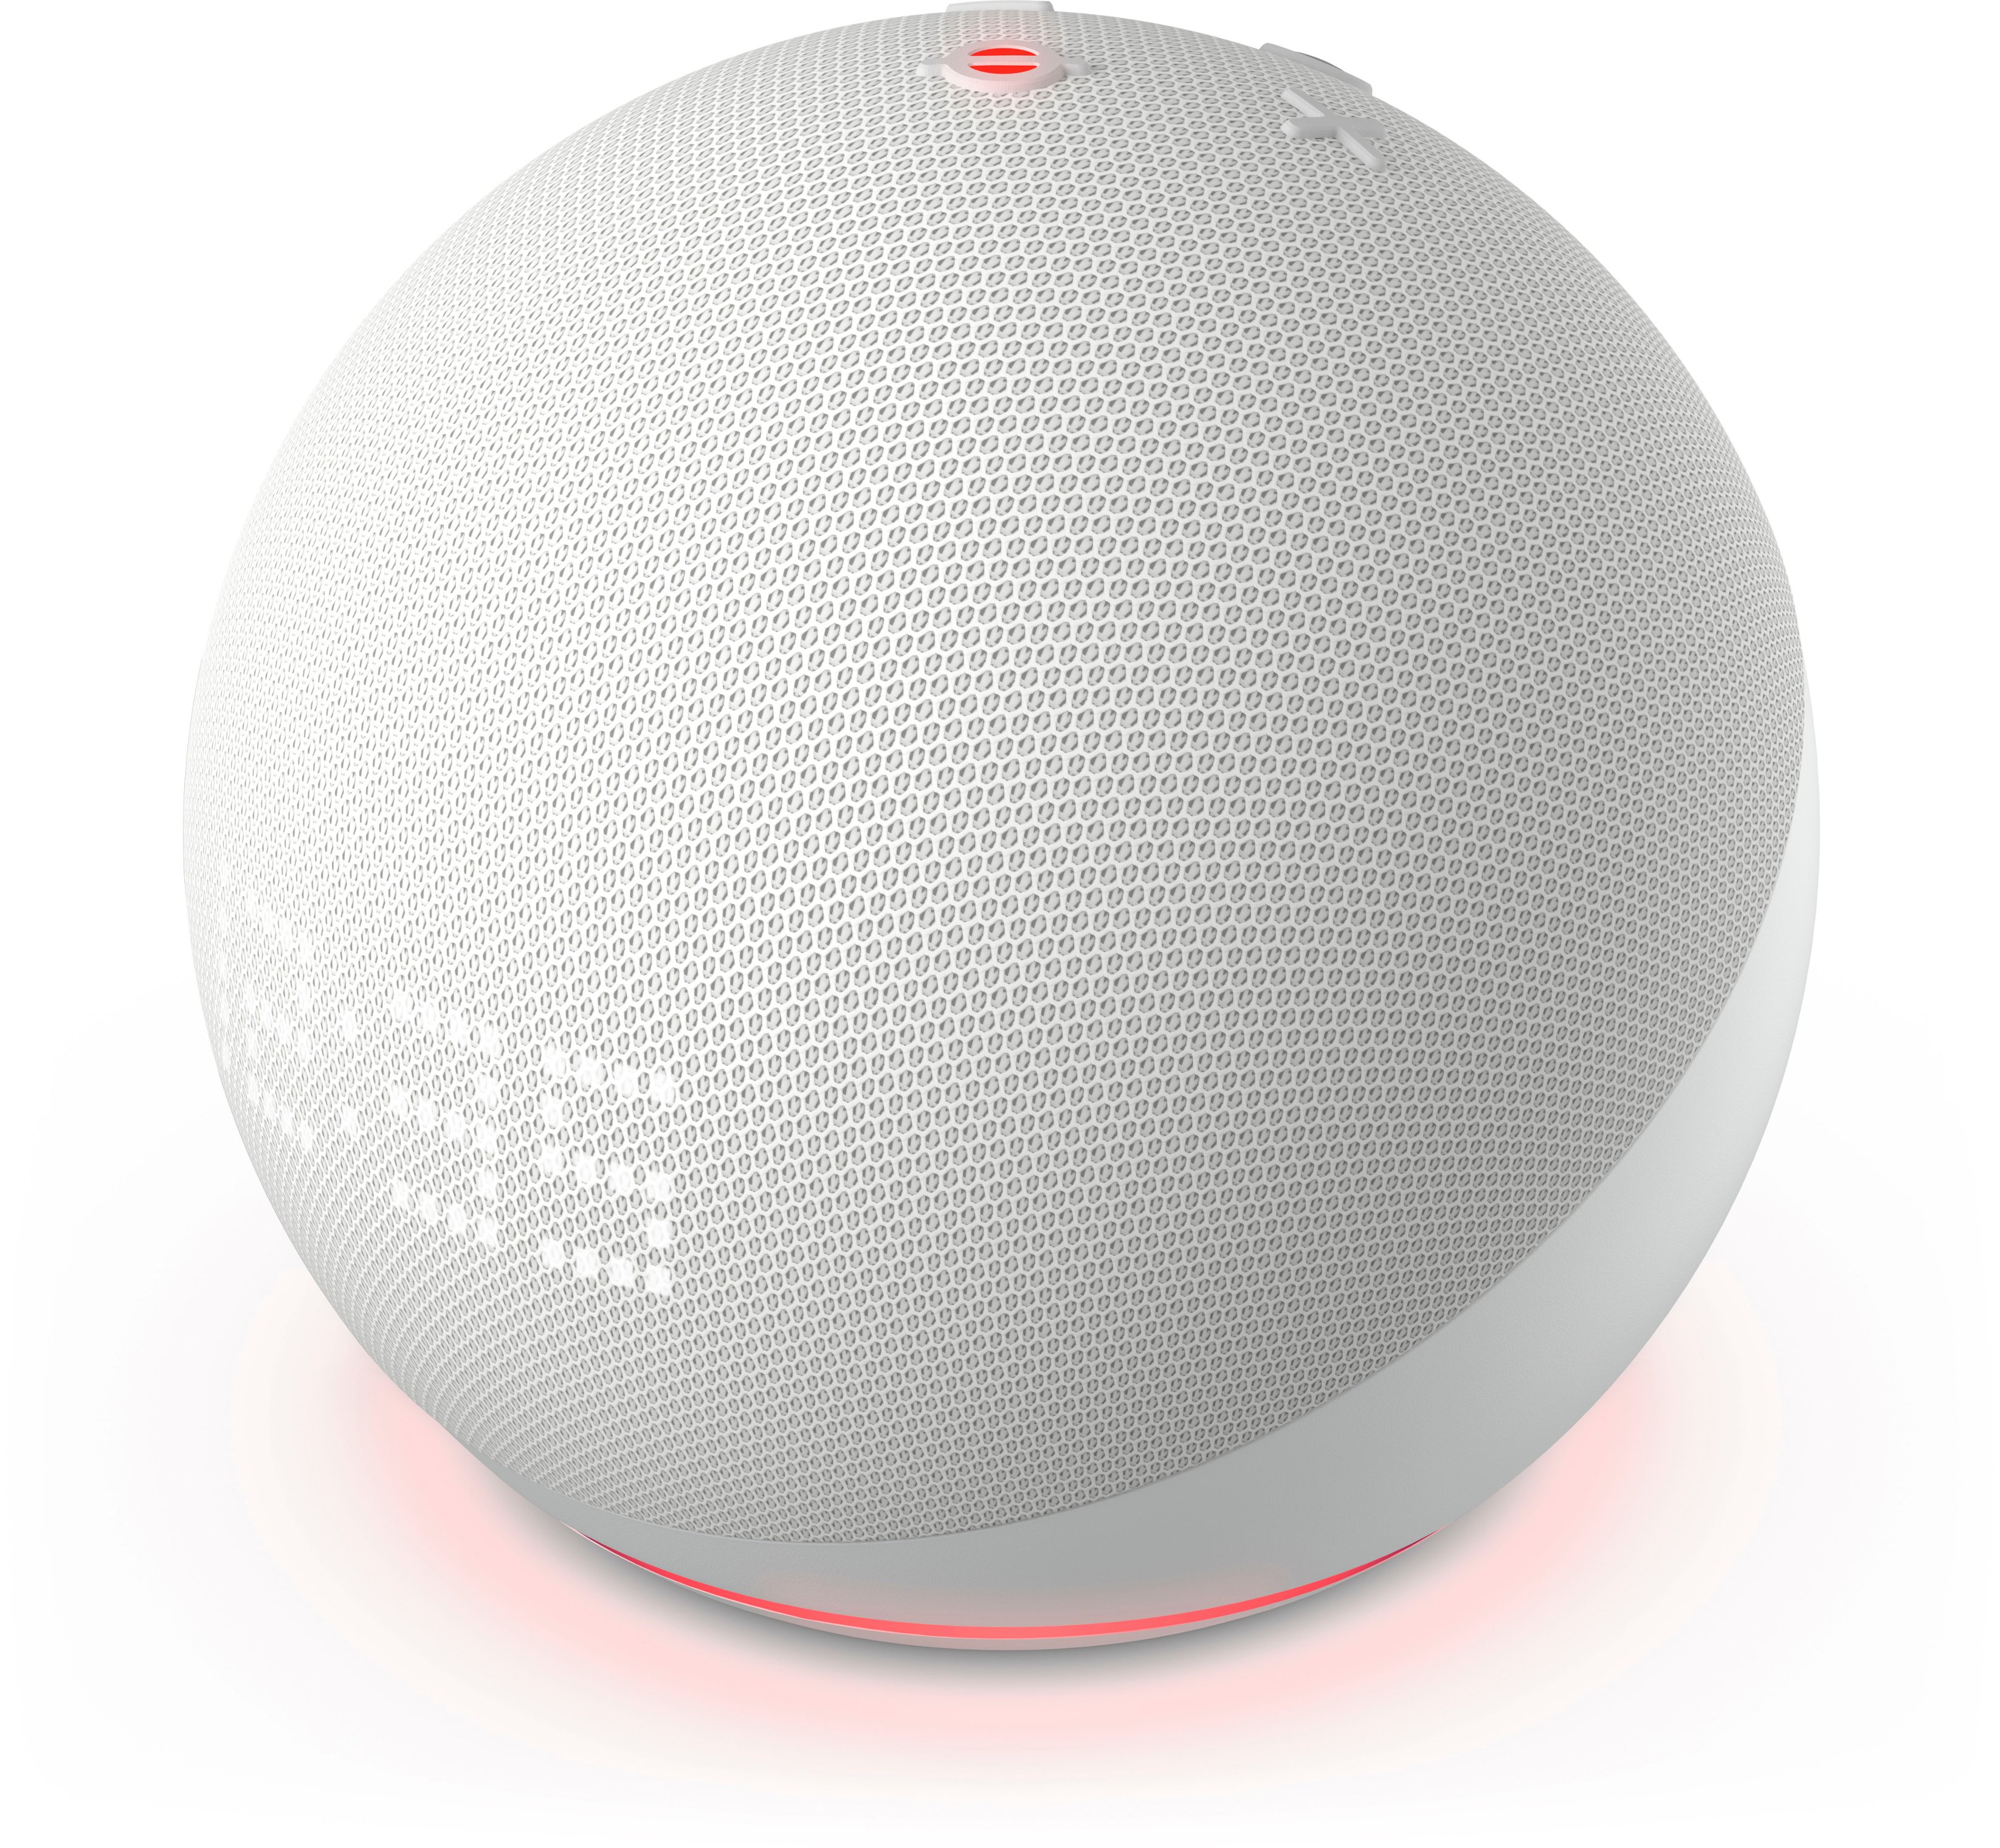 NEW  Echo Dot (5th Generation) Smart Speaker with Alexa - Charcoal -  BNIB!